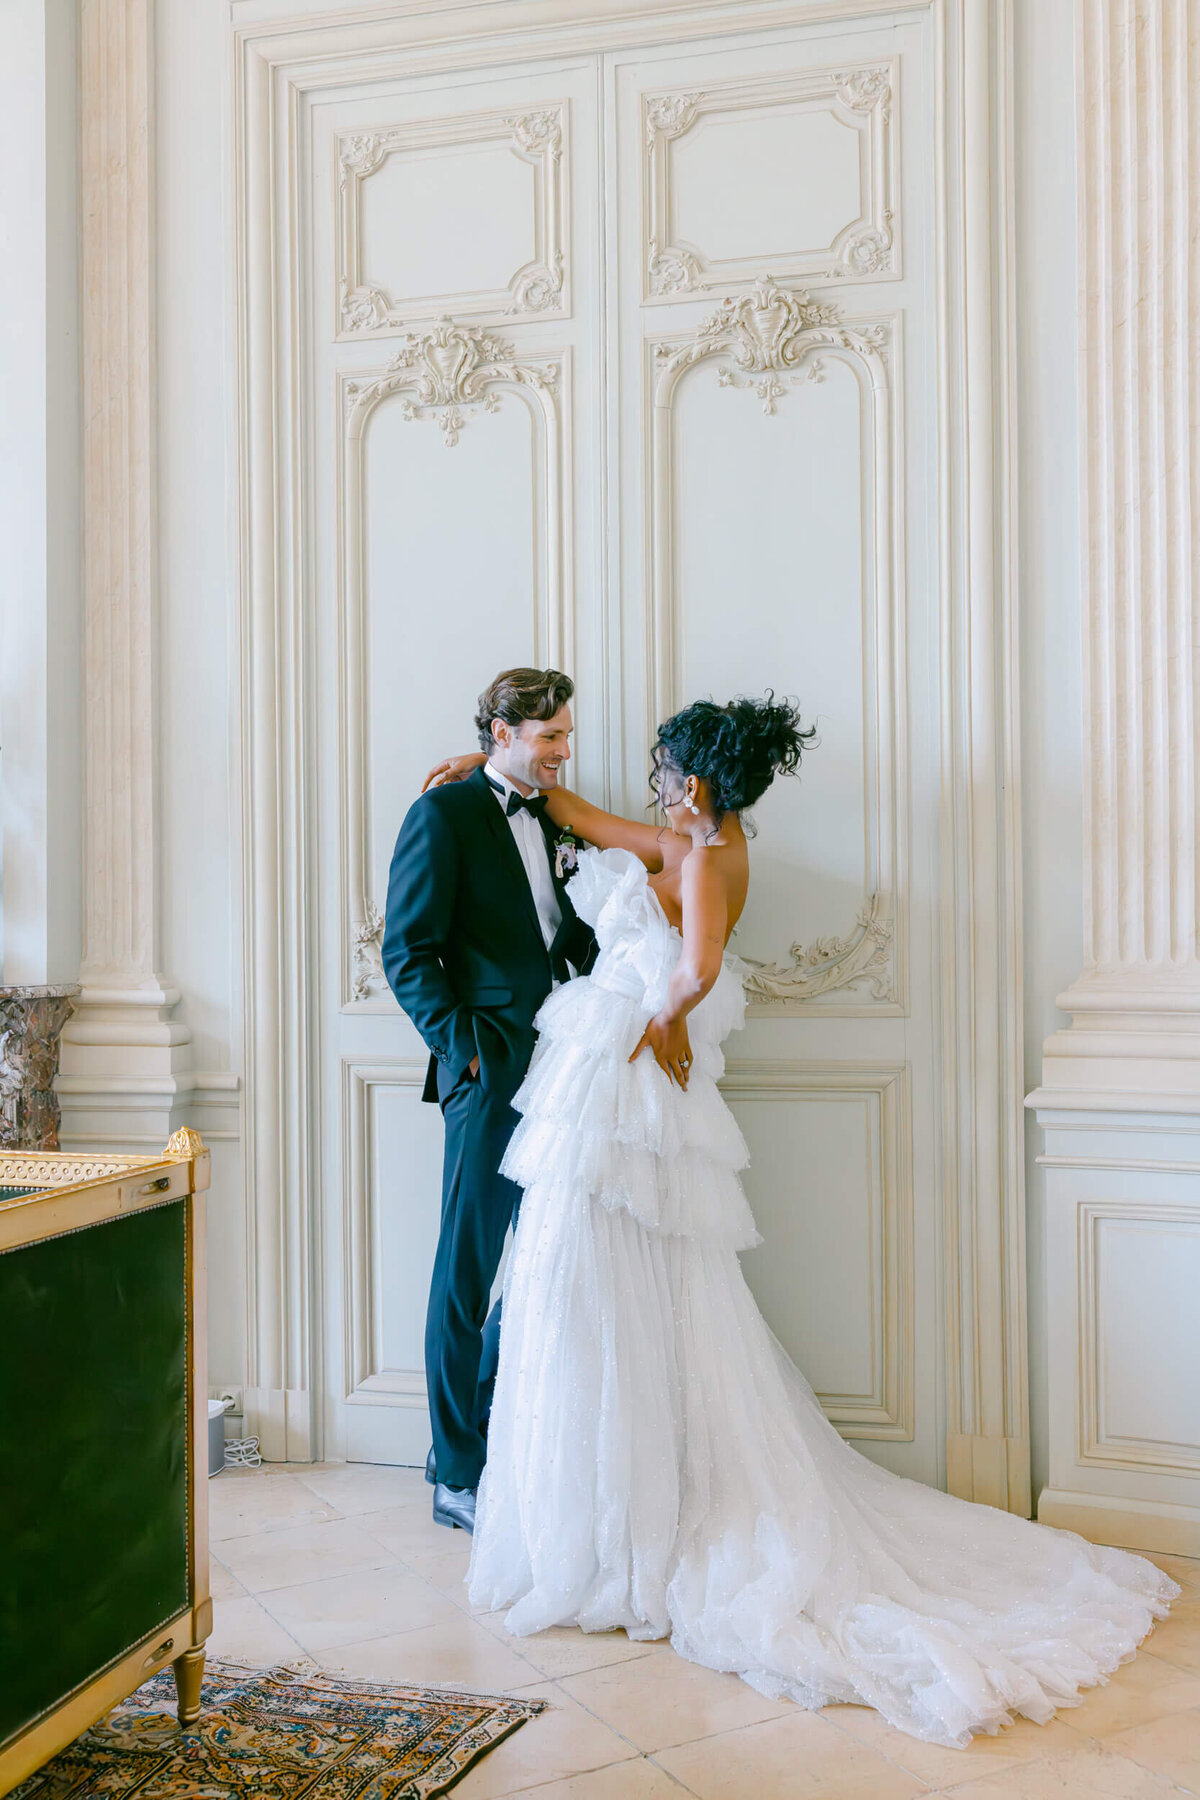 Jayce-Keil-Photo-Film-london-paris-ireland-wedding-photography-38